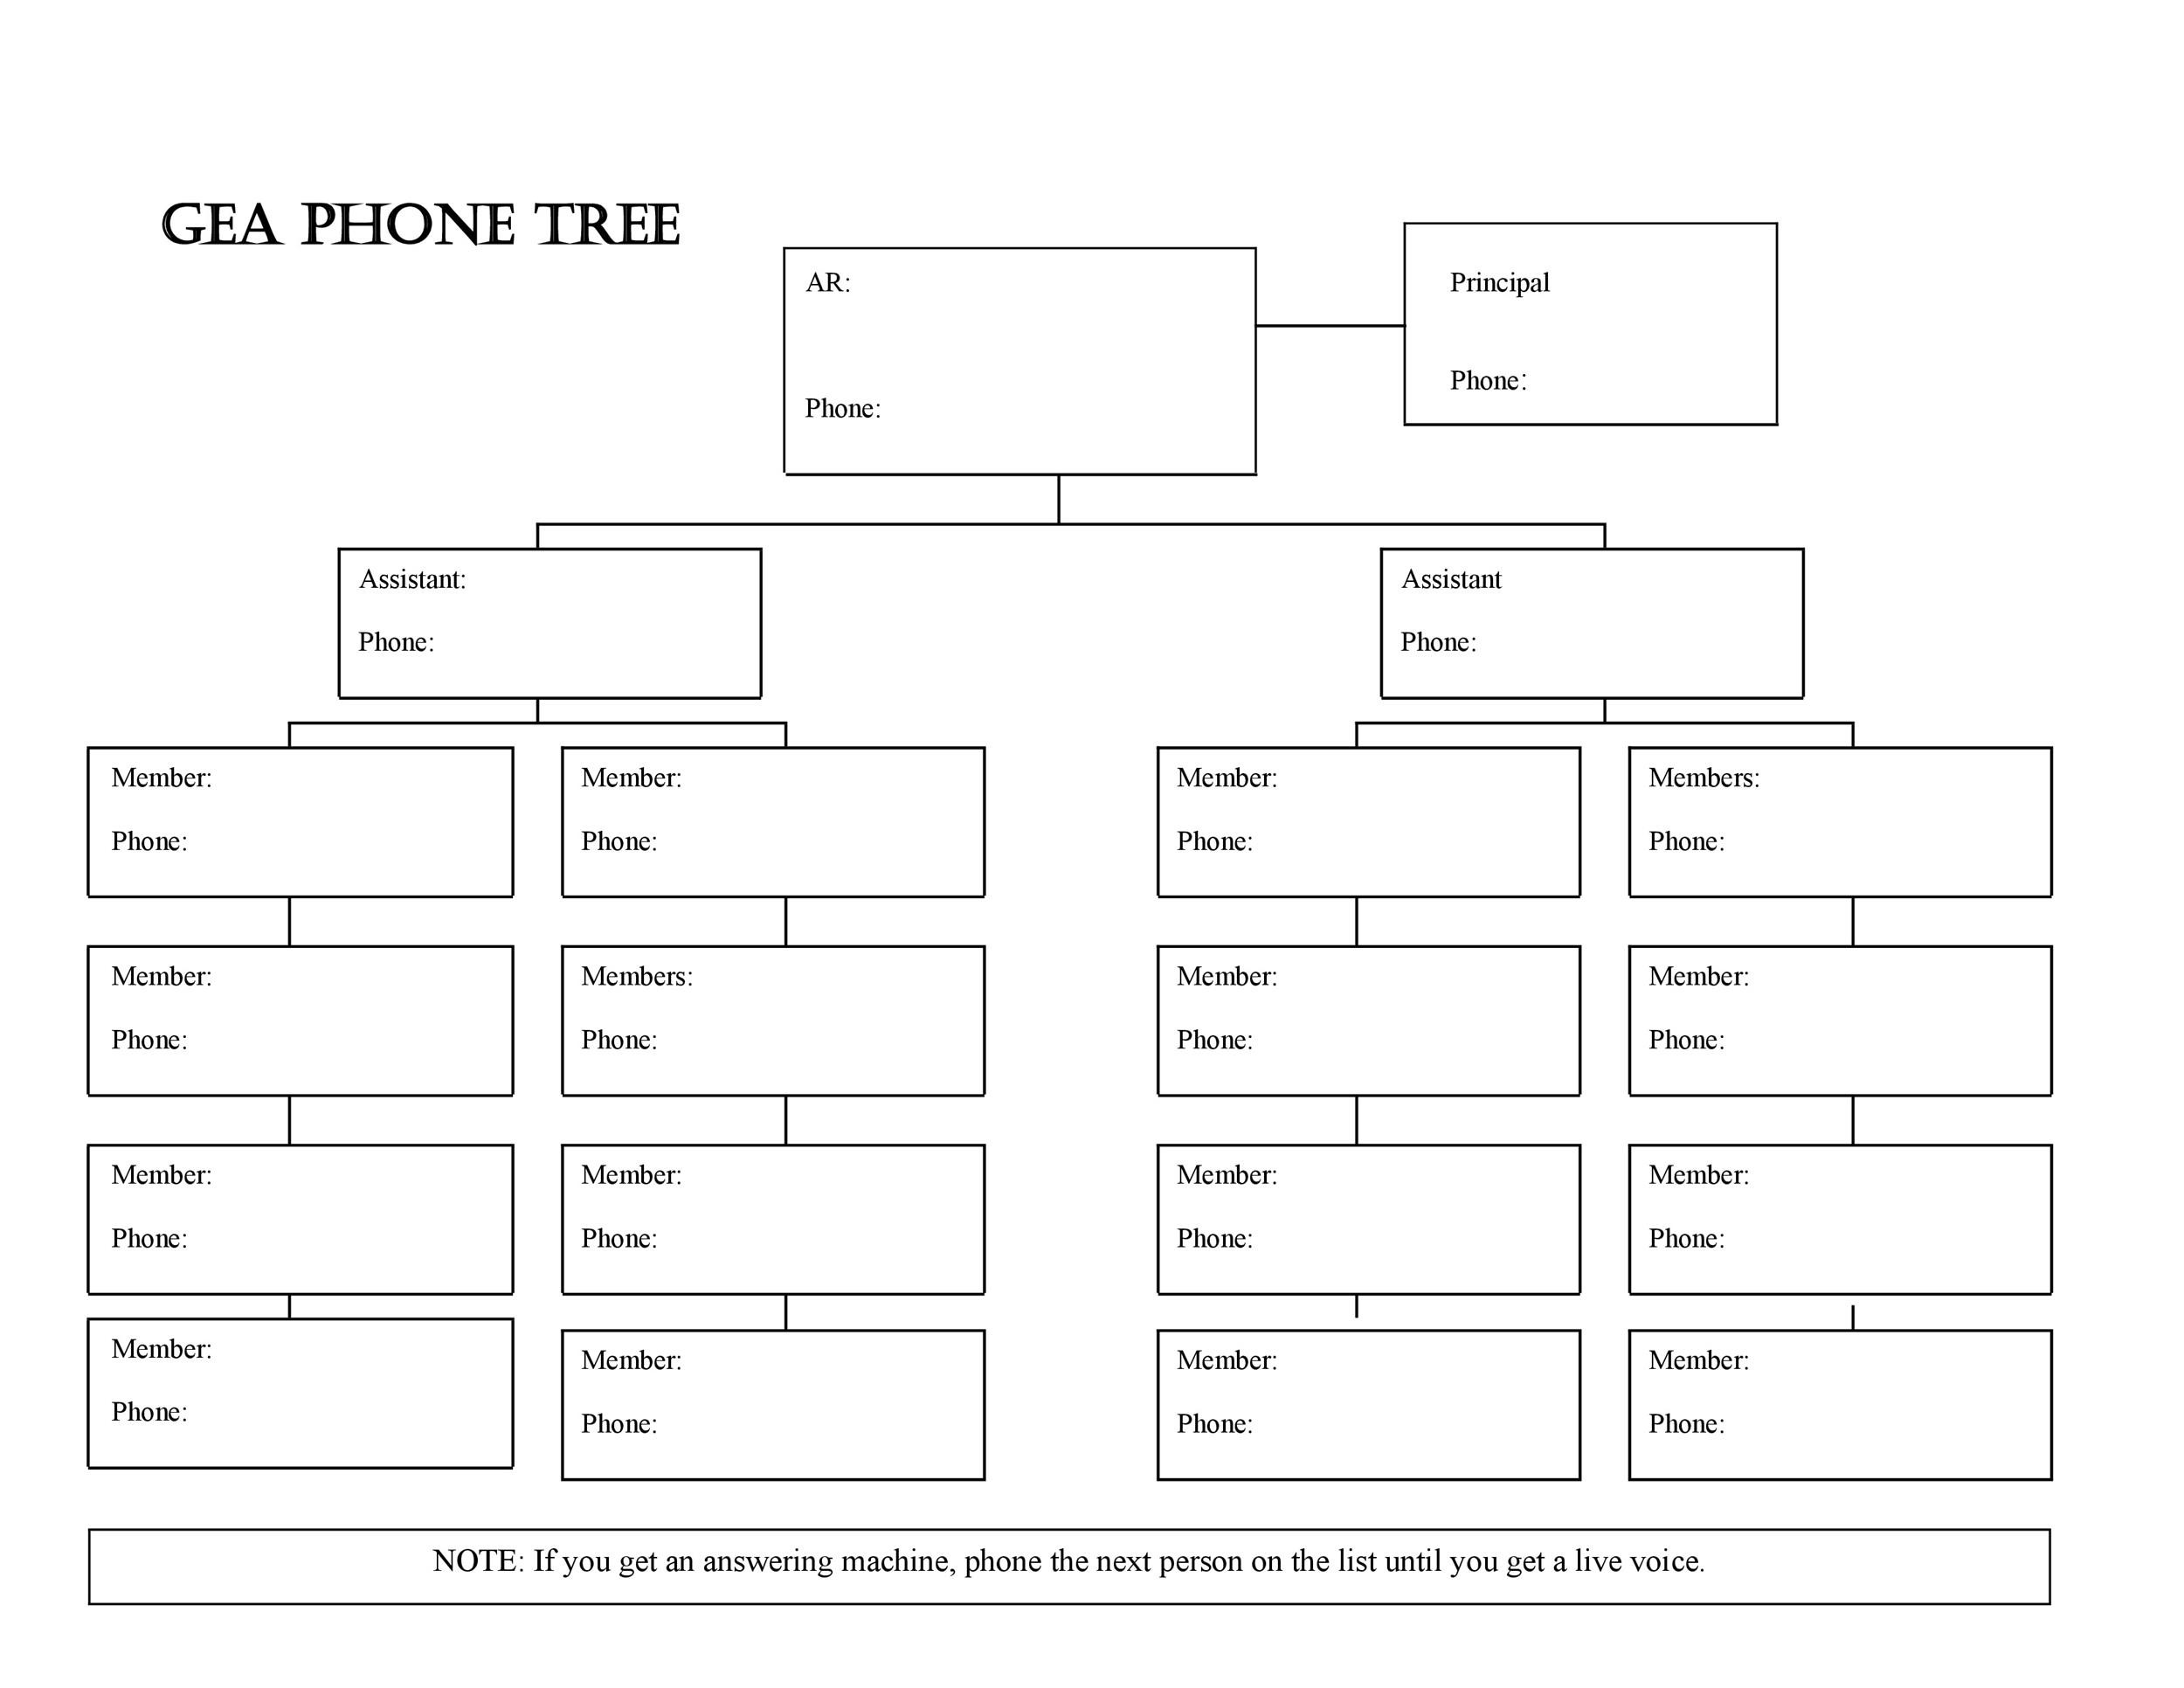 Microsoft Word Phone Tree Template